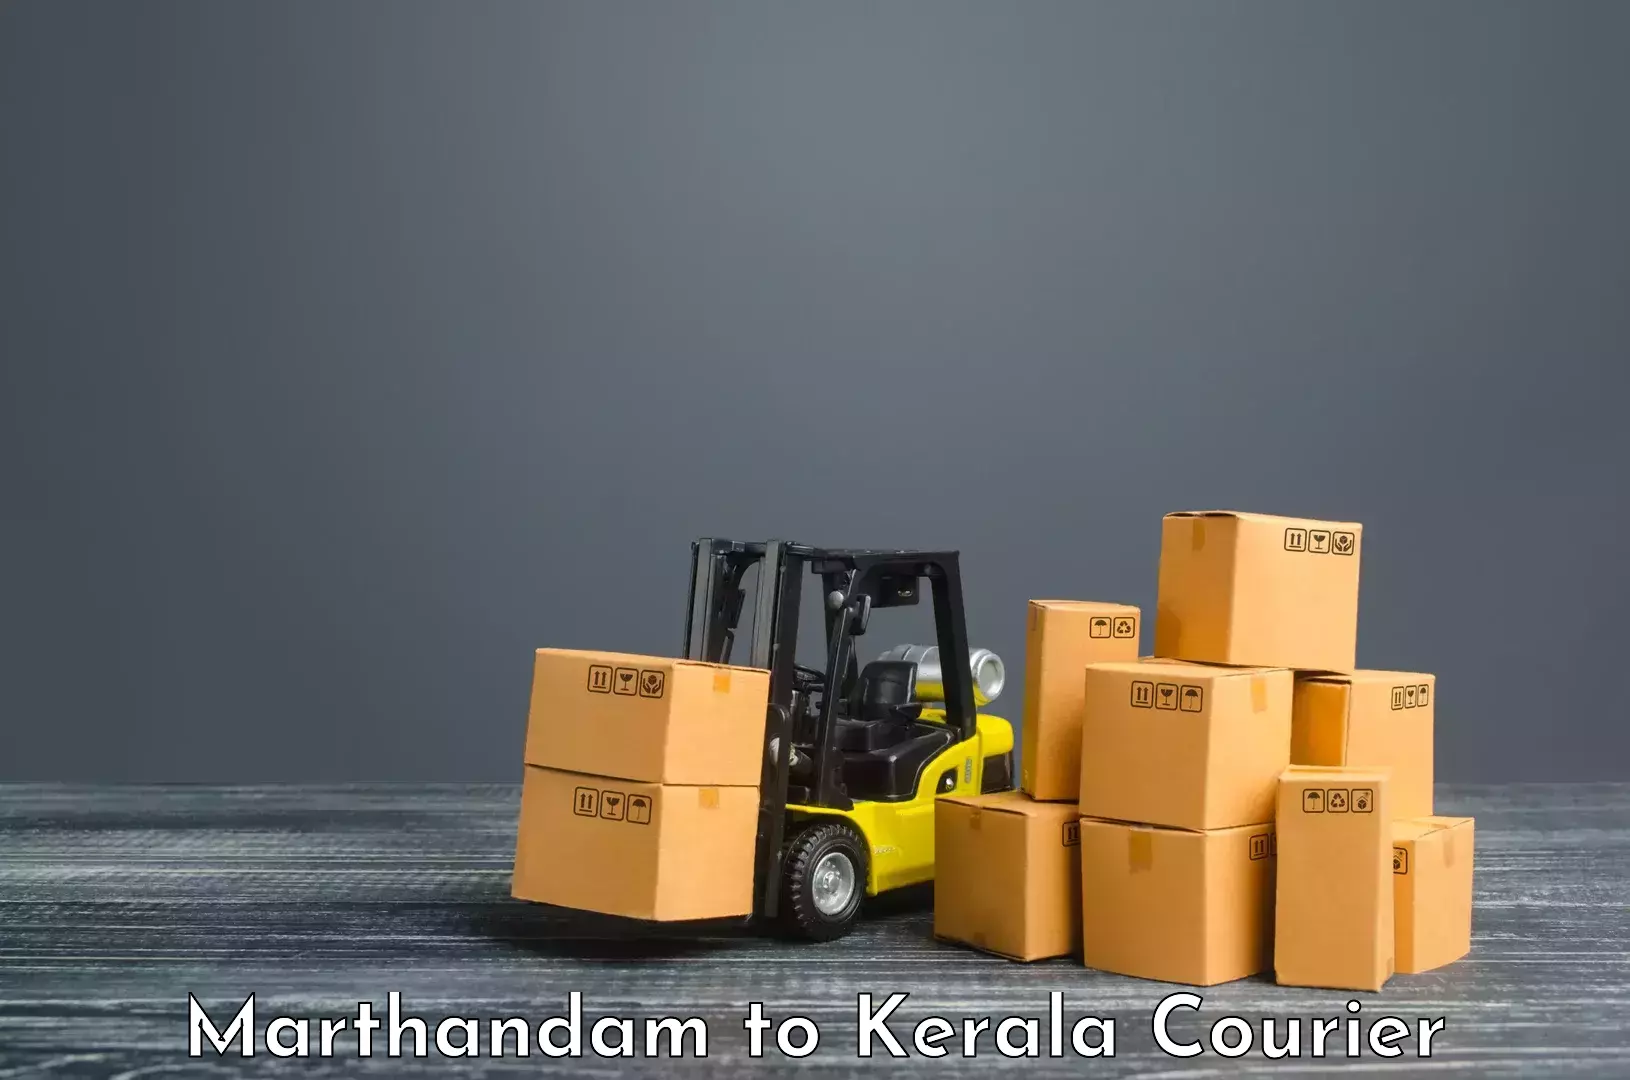 Courier service innovation Marthandam to Kerala